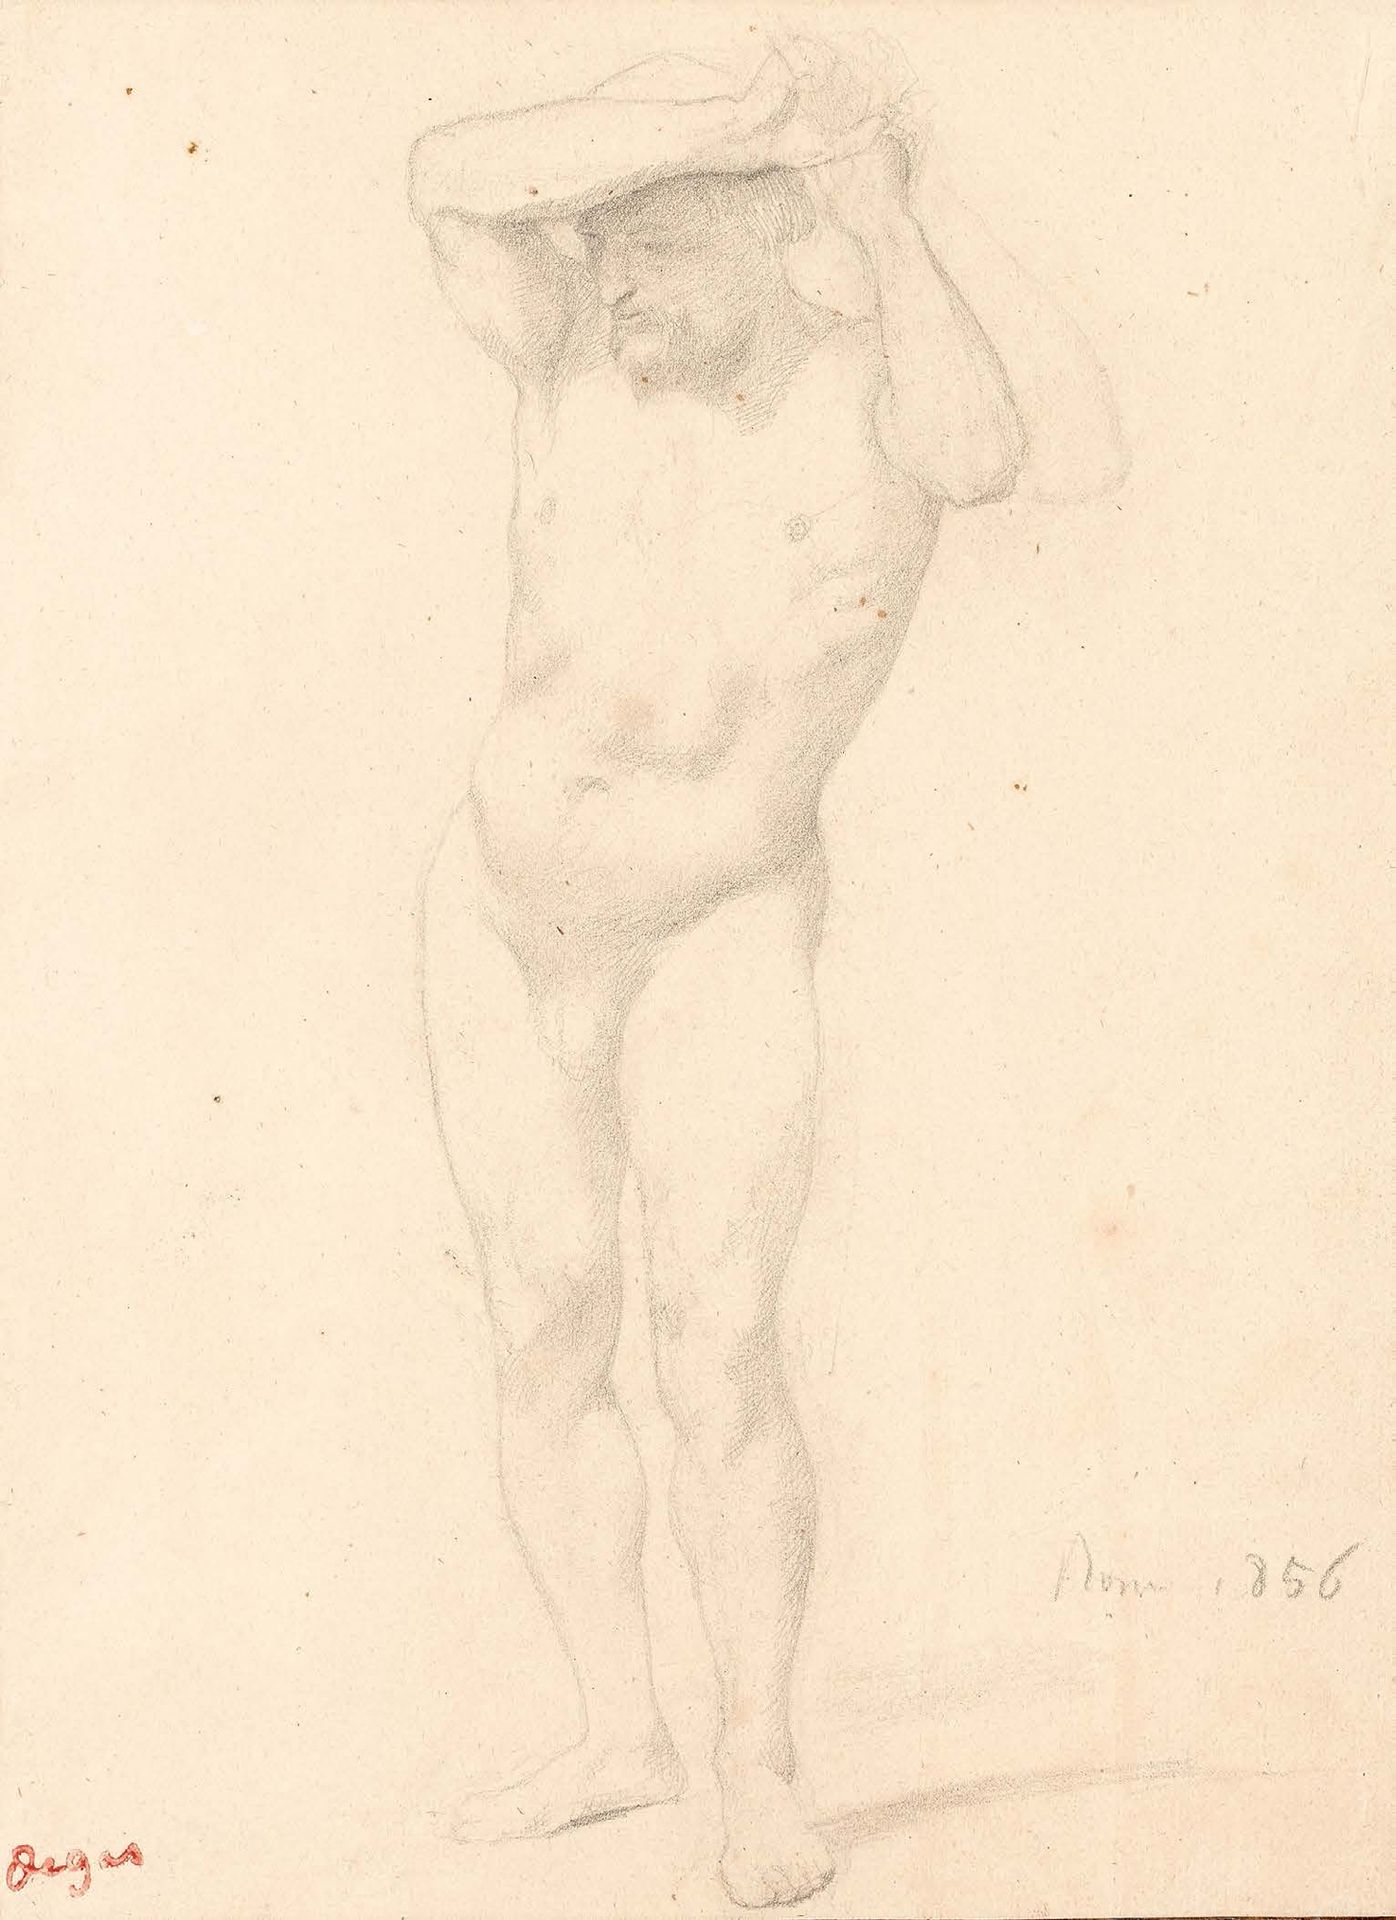 Edgar DEGAS (1834-1917) 
Nude Study, 1856
Black pencil and stump drawing, bears &hellip;